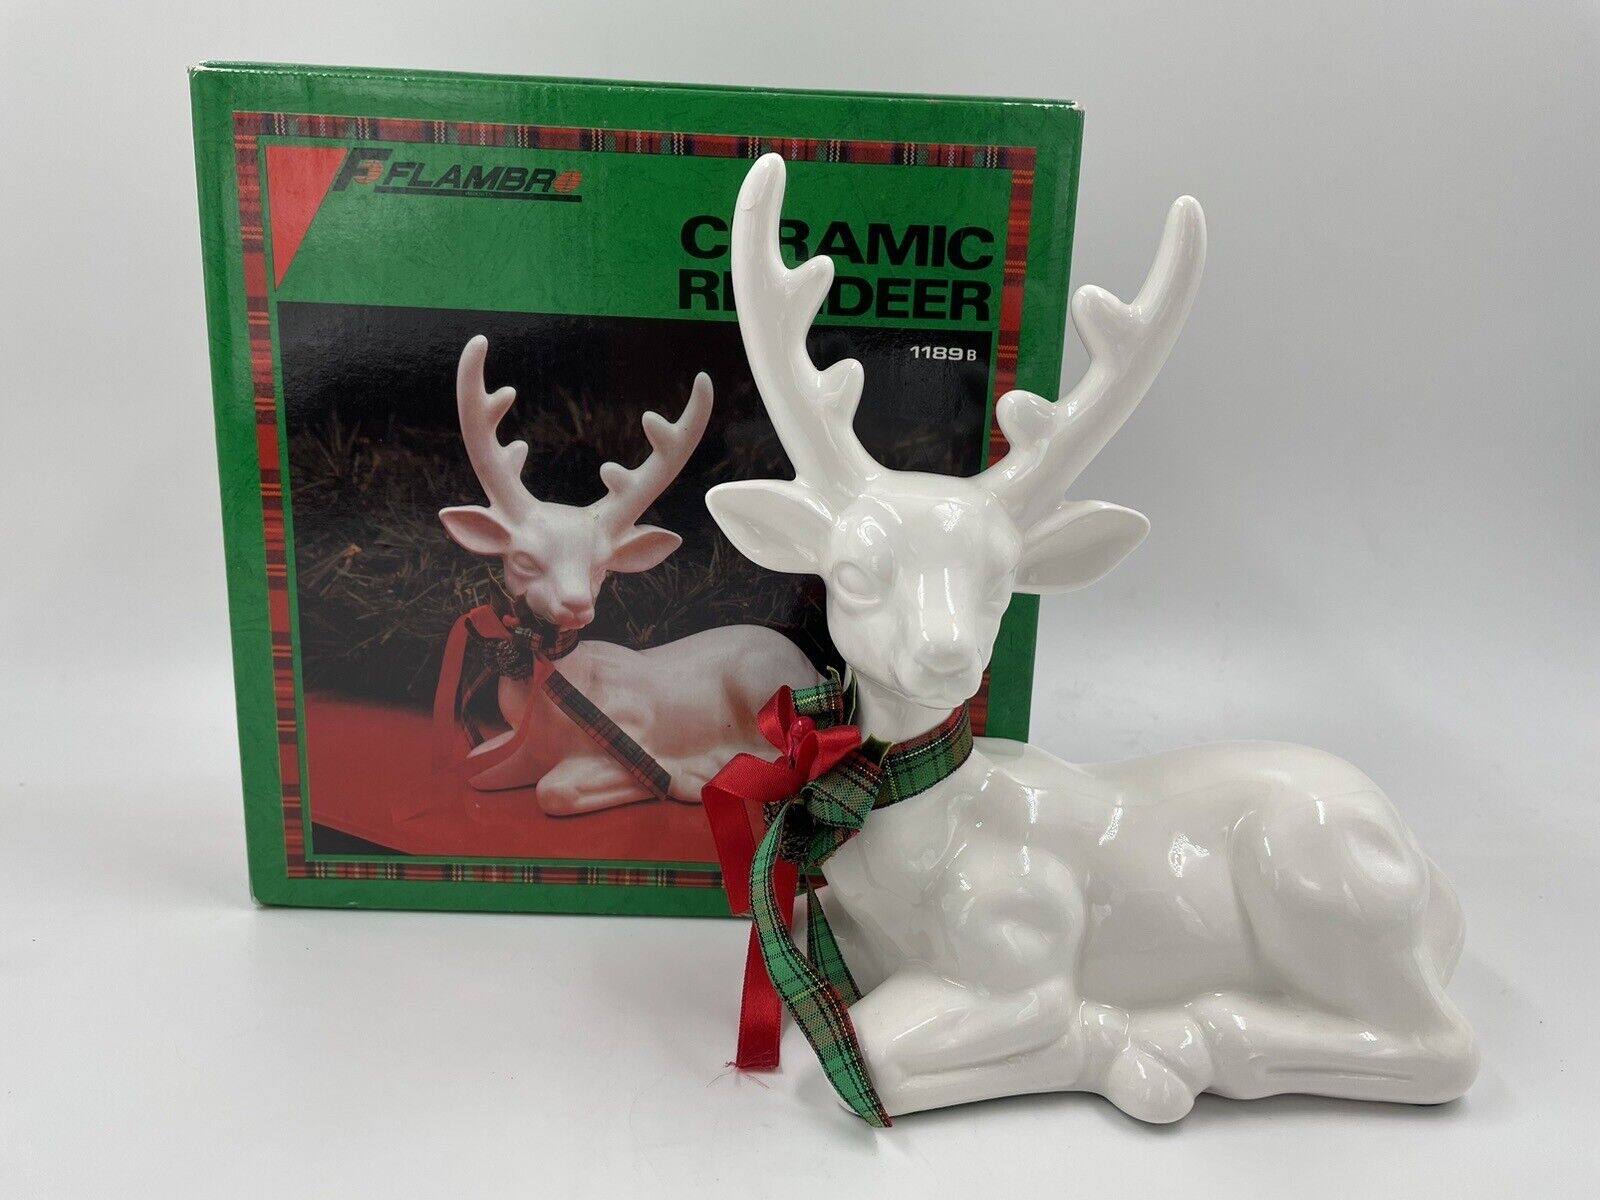 1988 Flambro Ceramic Reindeer Figurine w/Box 1189B Vintage Christmas Decoration